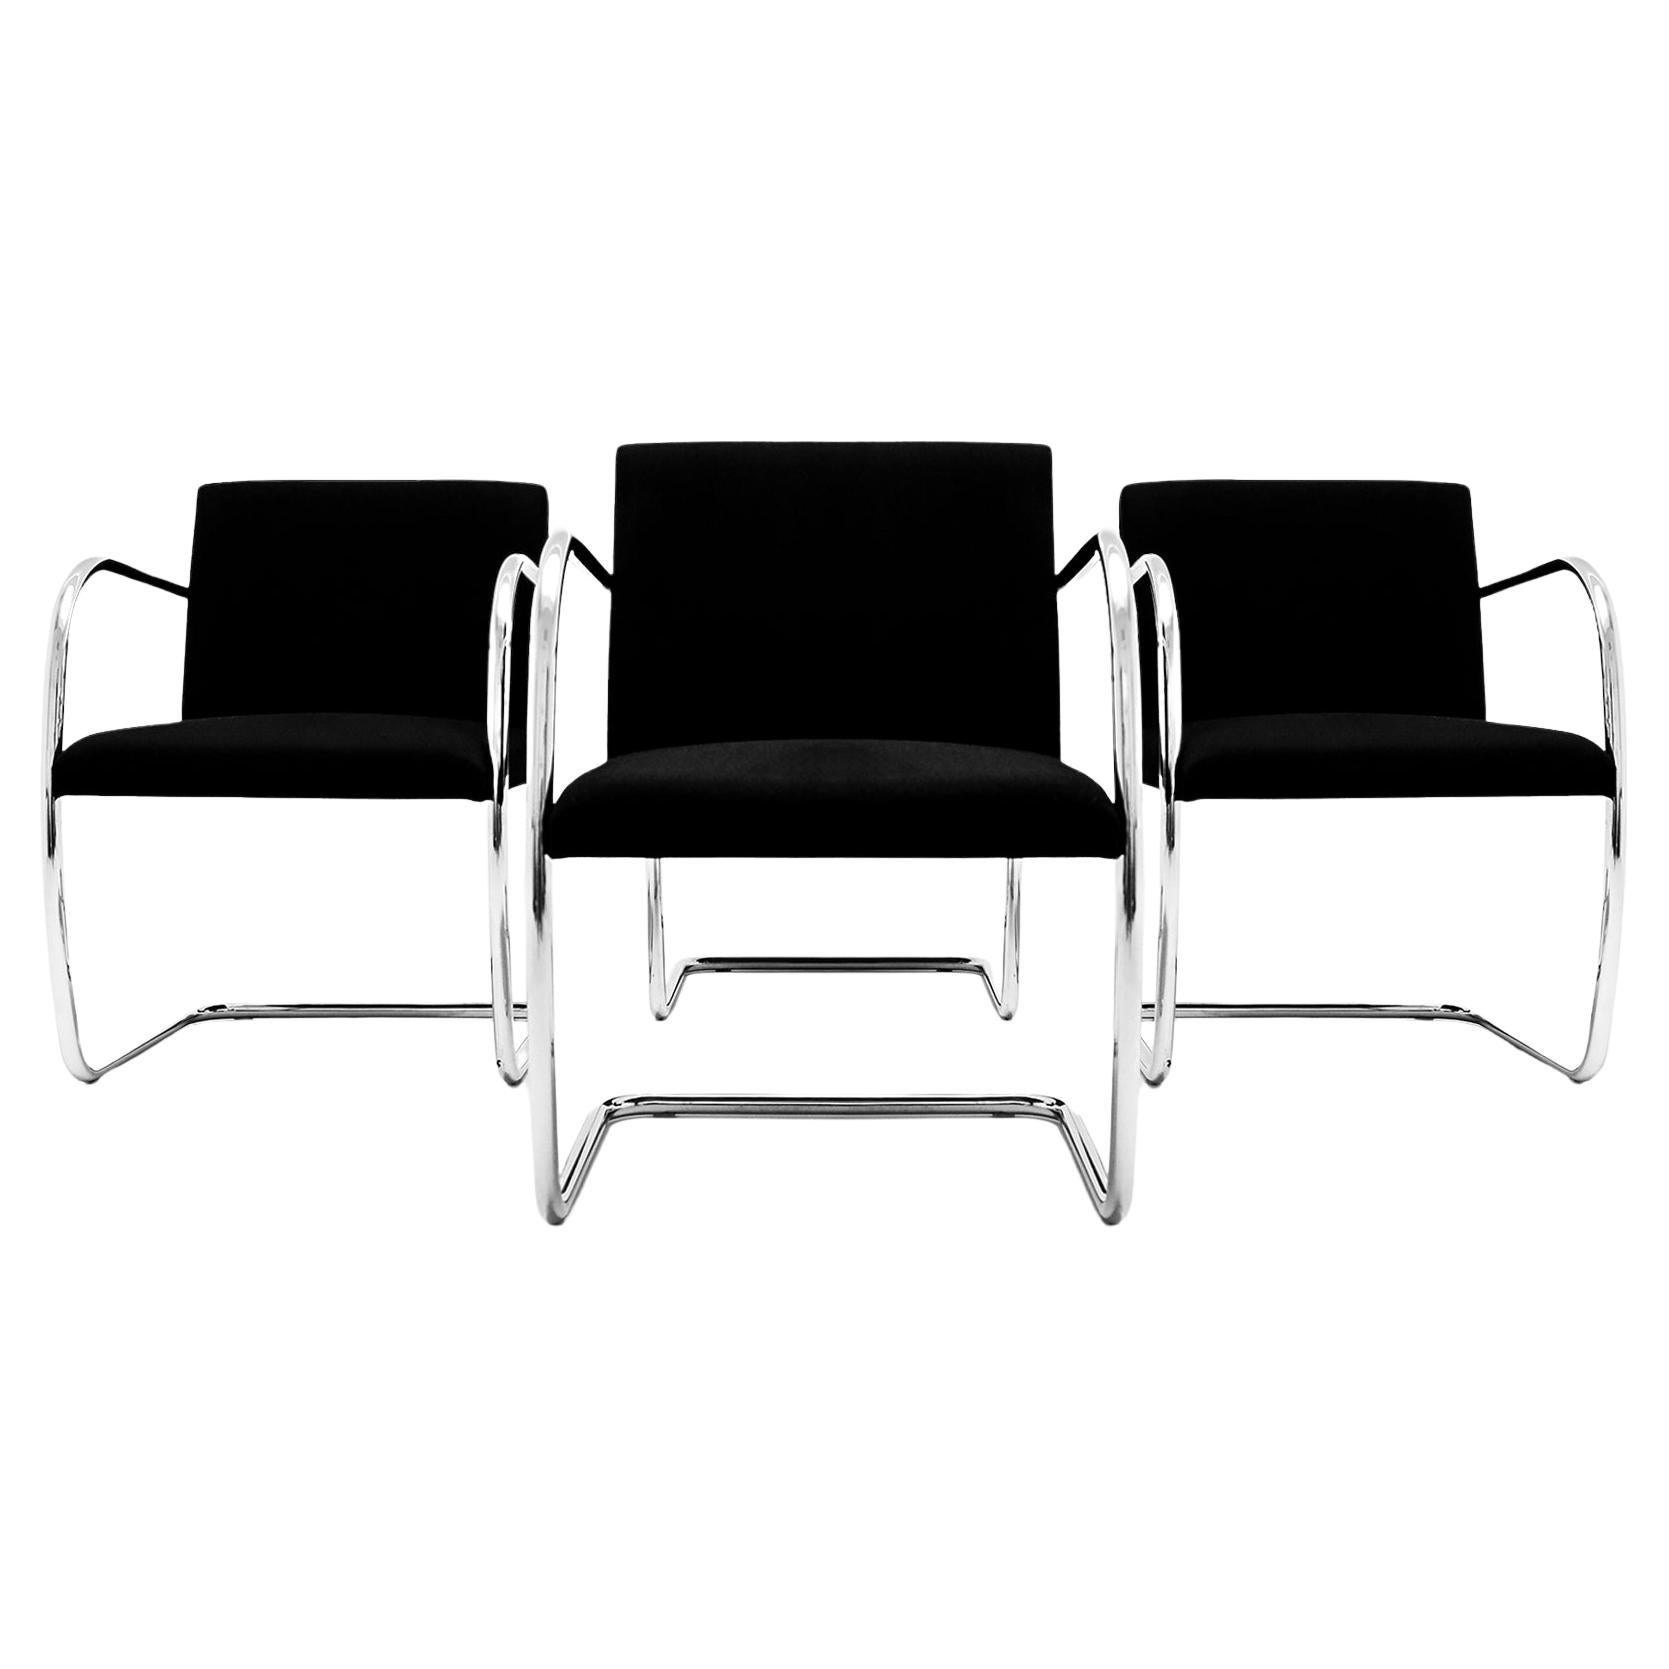 4 Vintage Ludwig Mies van der Rohe Knoll, MR50 BRNO tubular chrome dining chairs